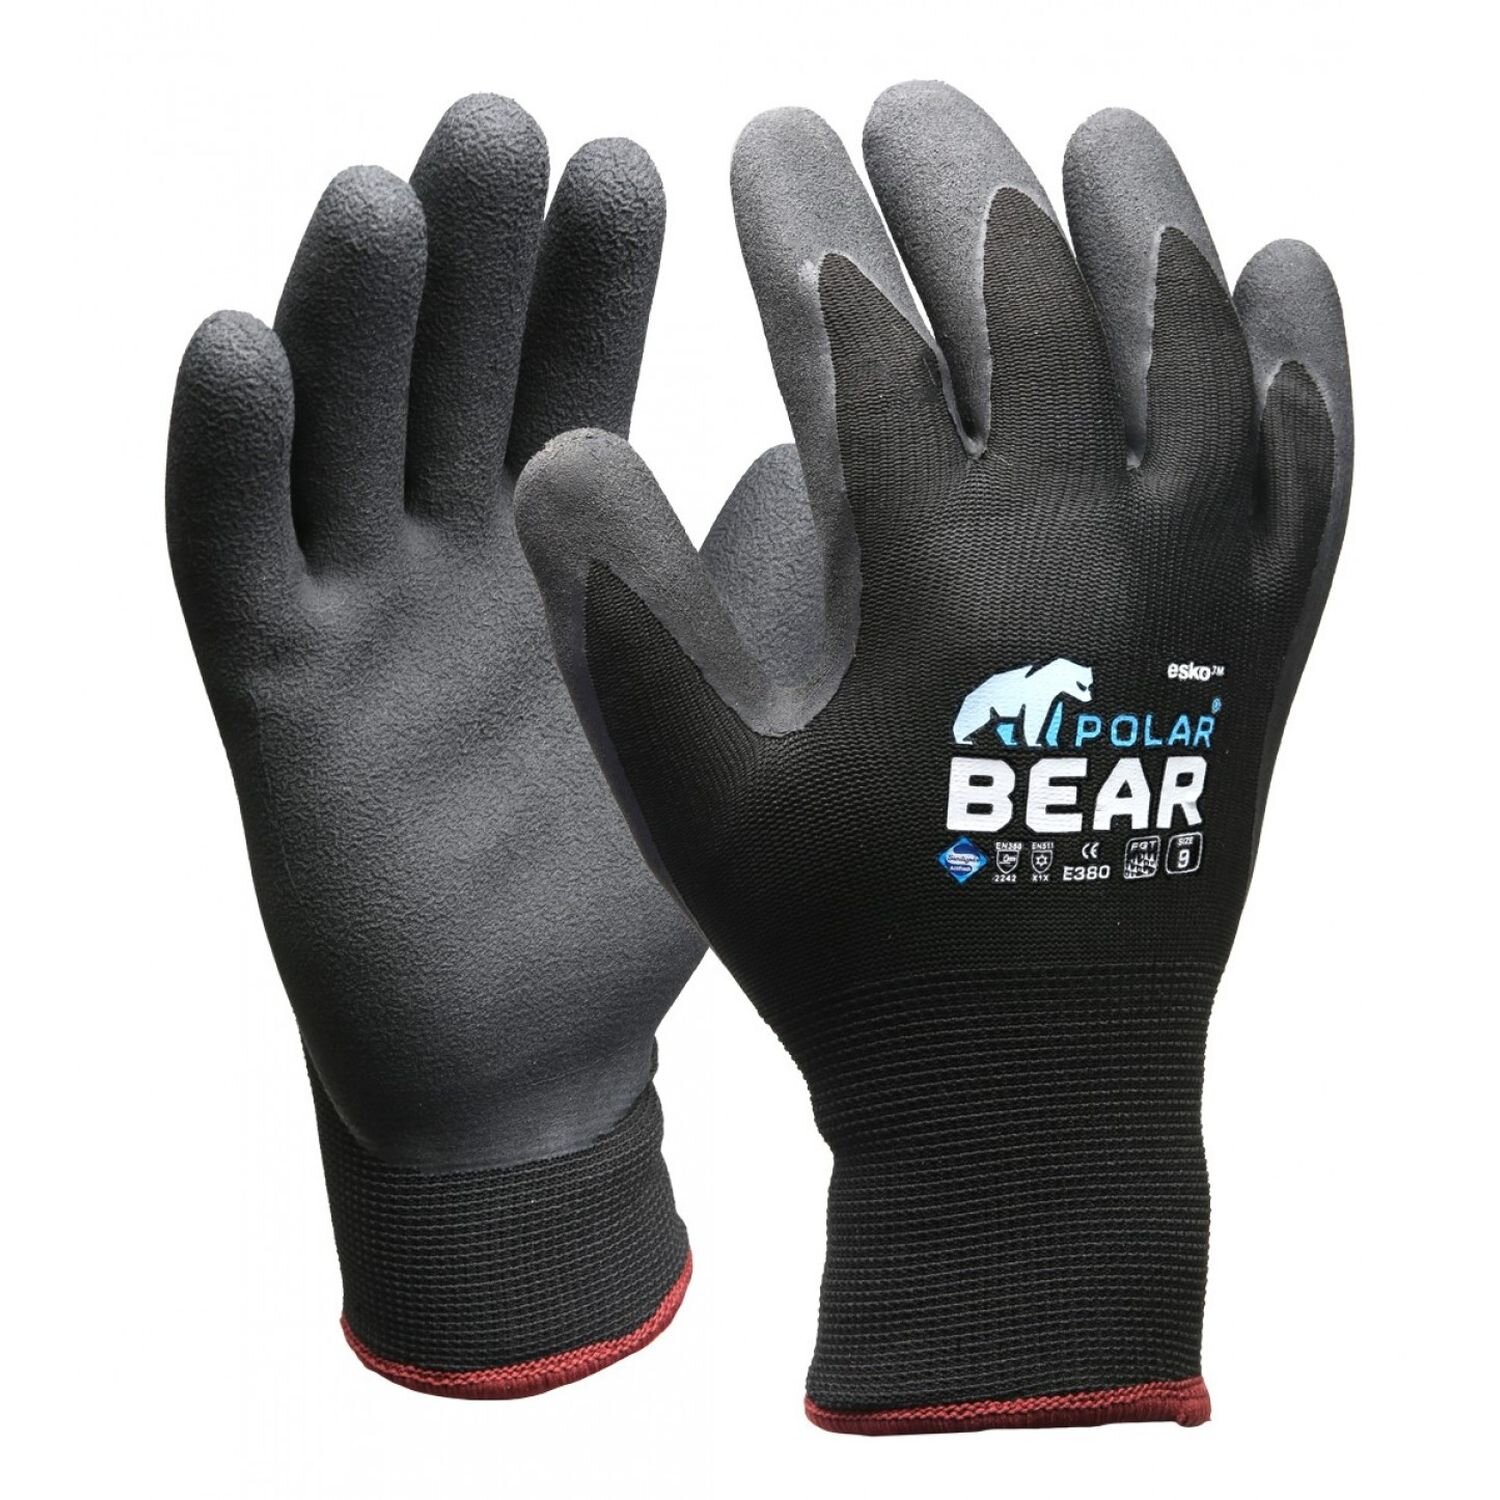 Polar Bear Thermo Winter Gloves Grey/Black (Pkt 12)